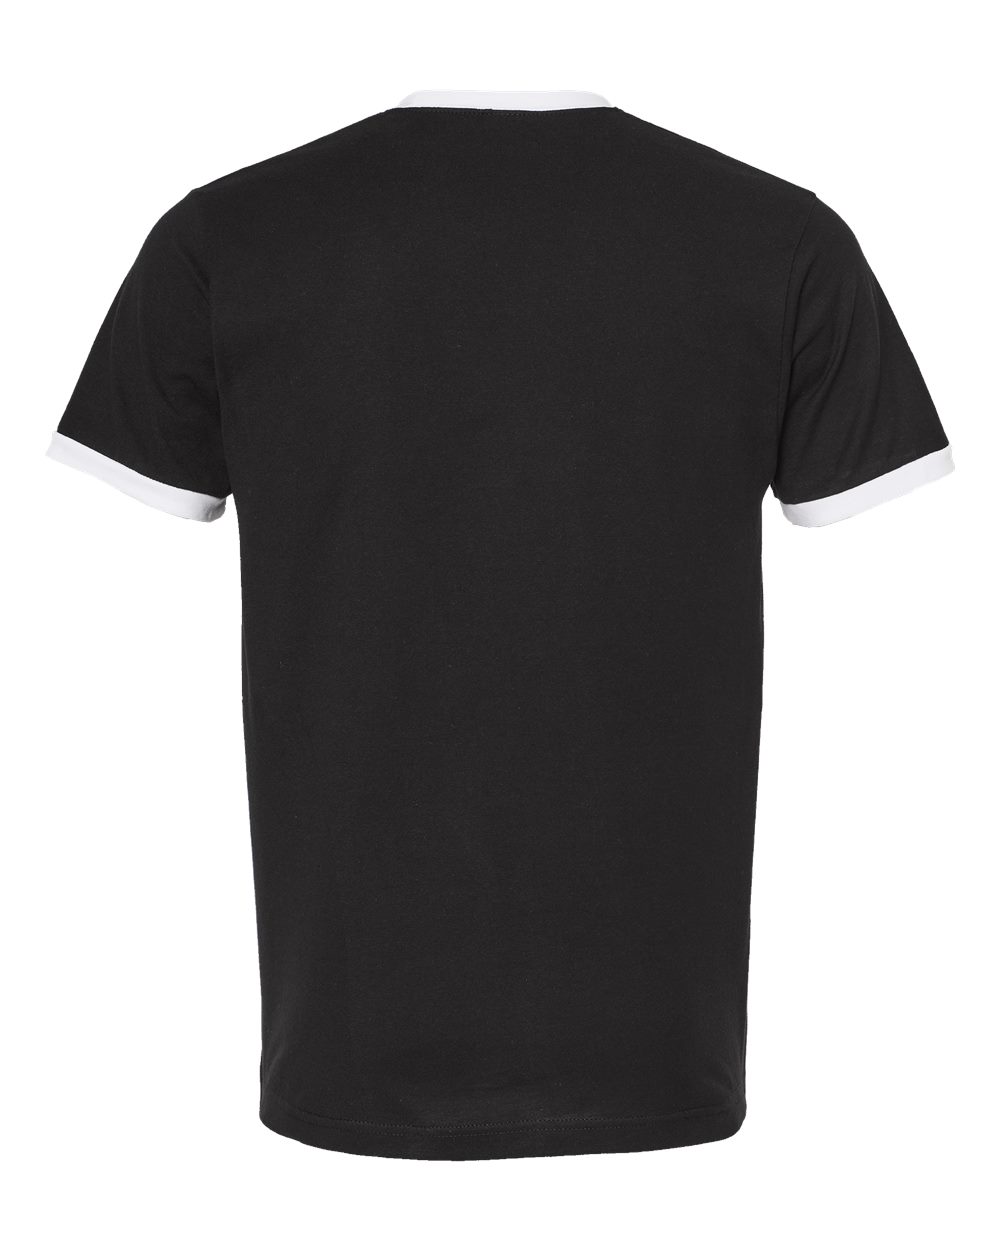 Unisex Fine Jersey Ringer T-Shirt - Tultex 246 | Clothing Shop Online